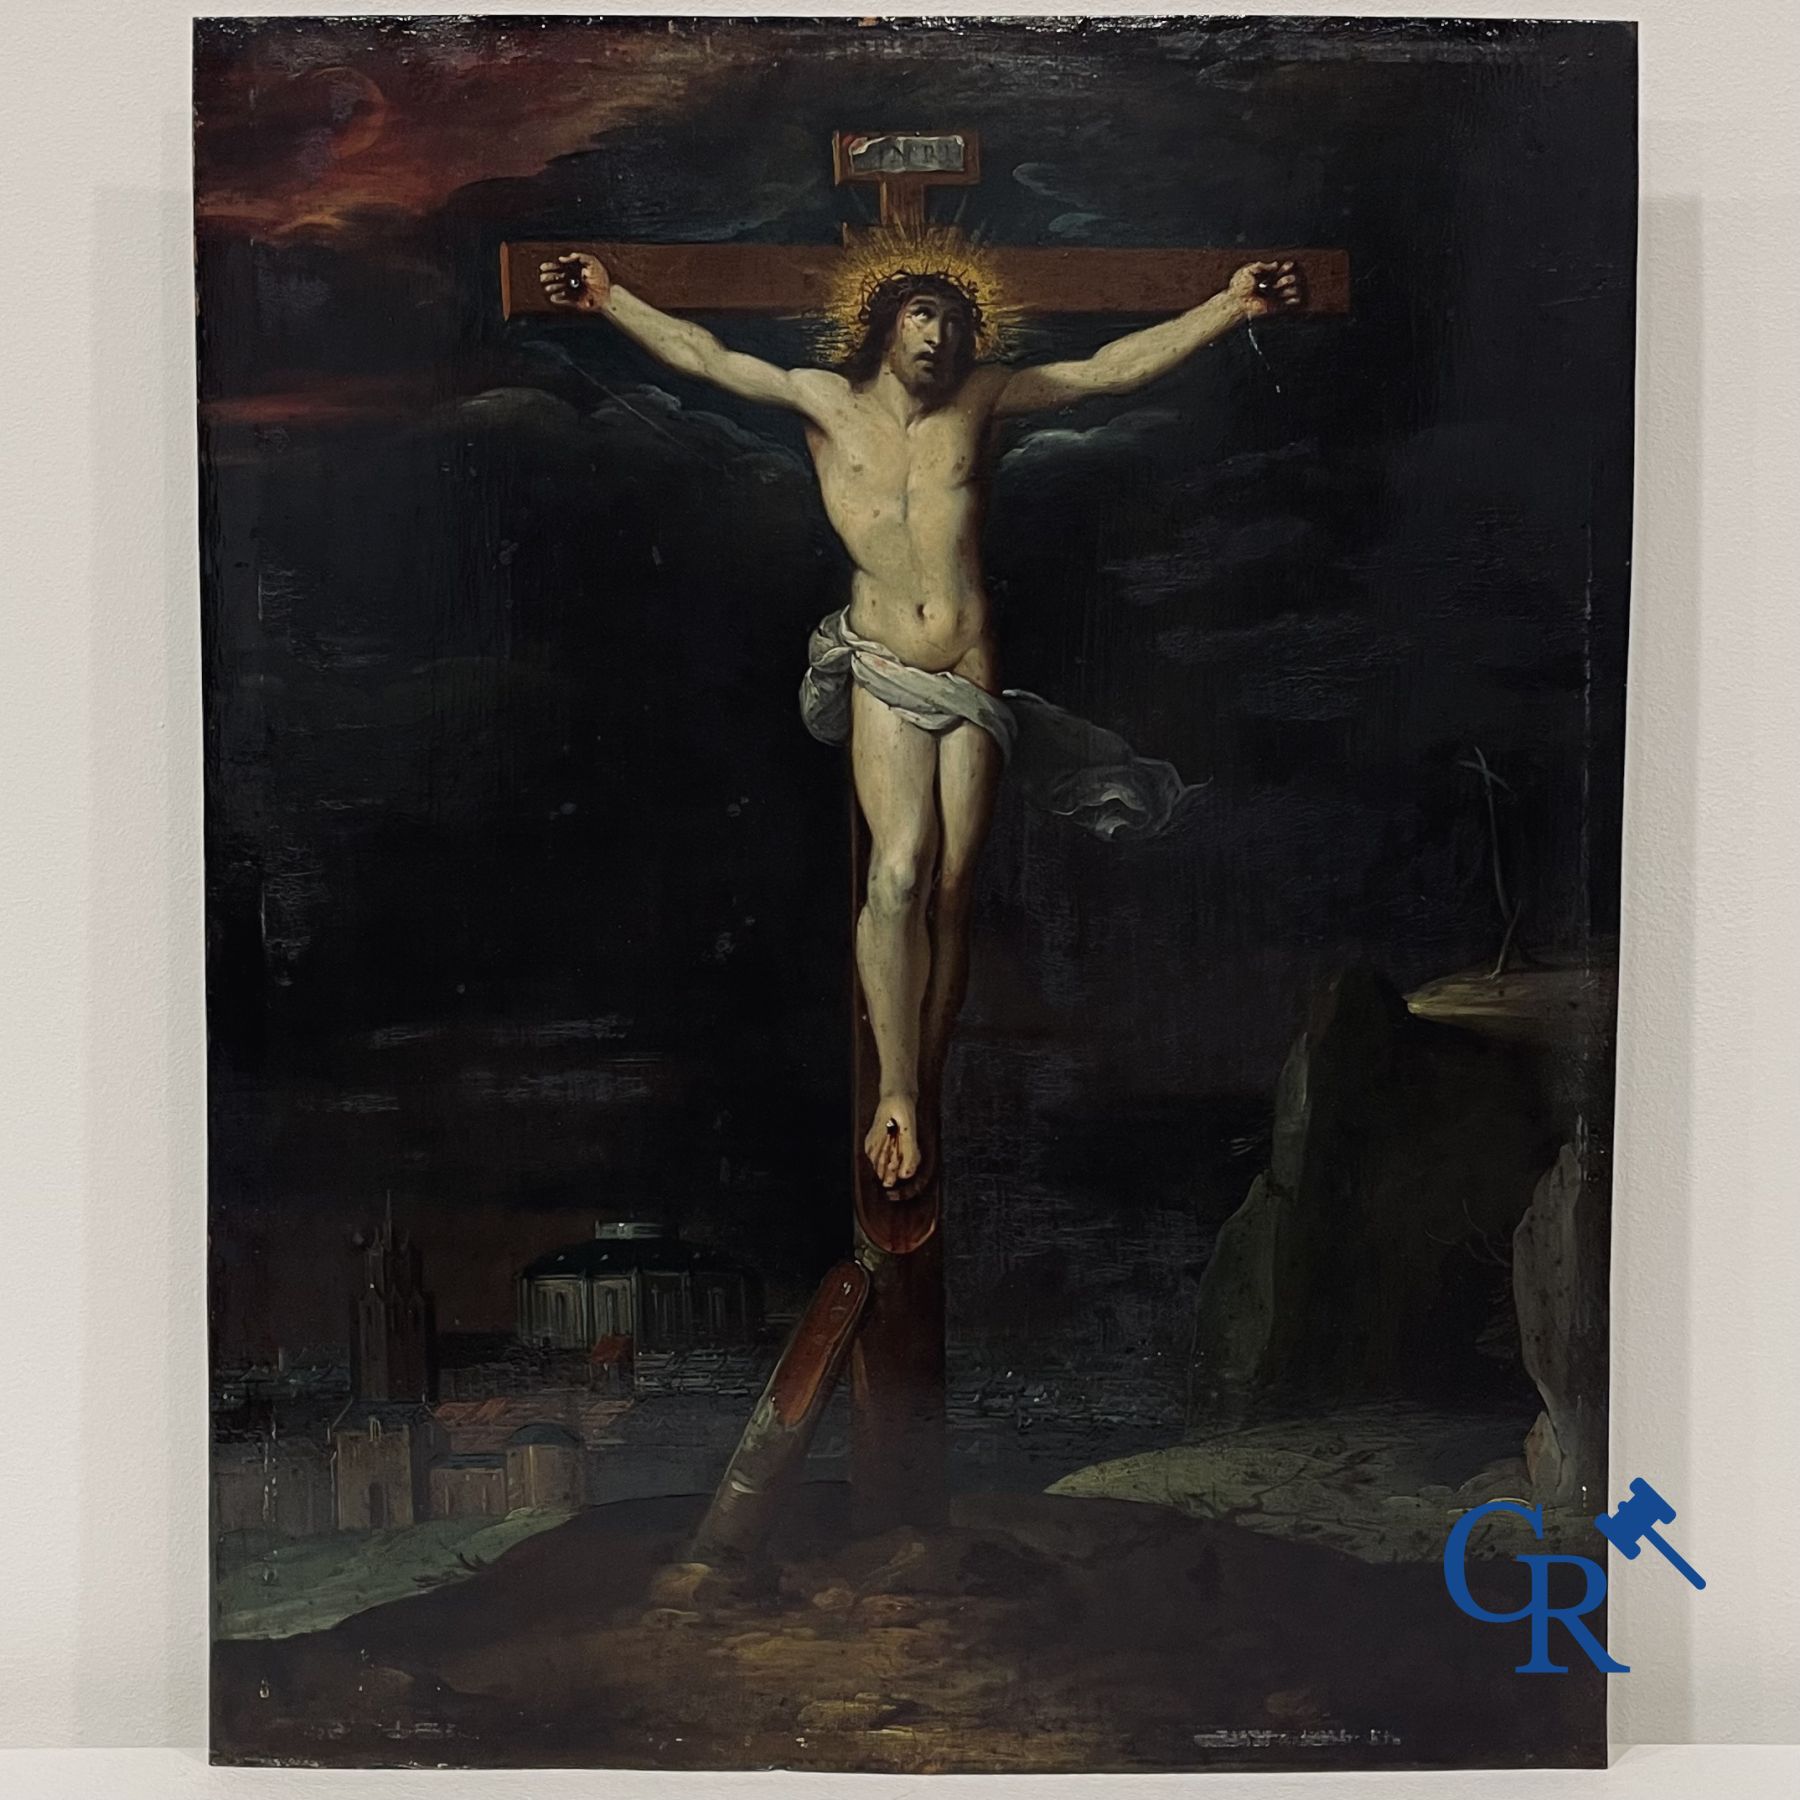 Flemish school: Christ on the cross. Oil on copper. 16th-17th century.